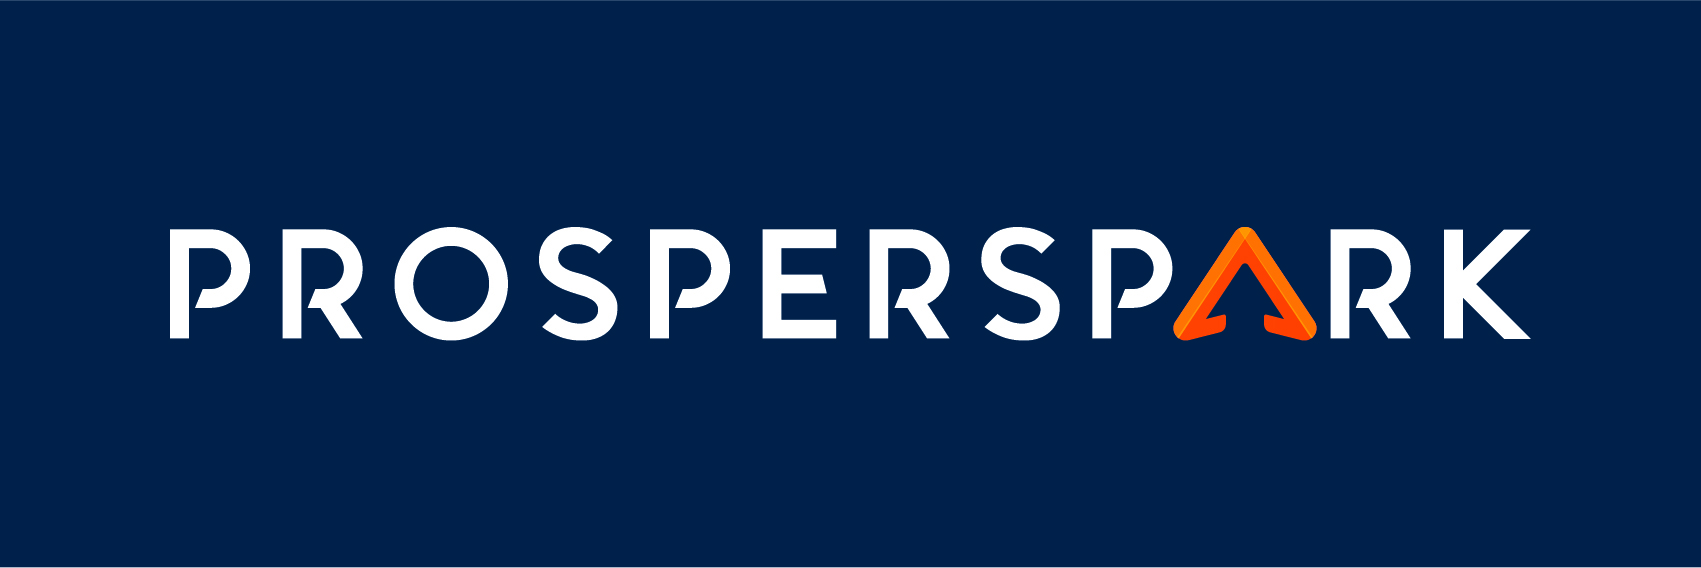 ProsperSpark - Spreadsheets. Analysis. Process.